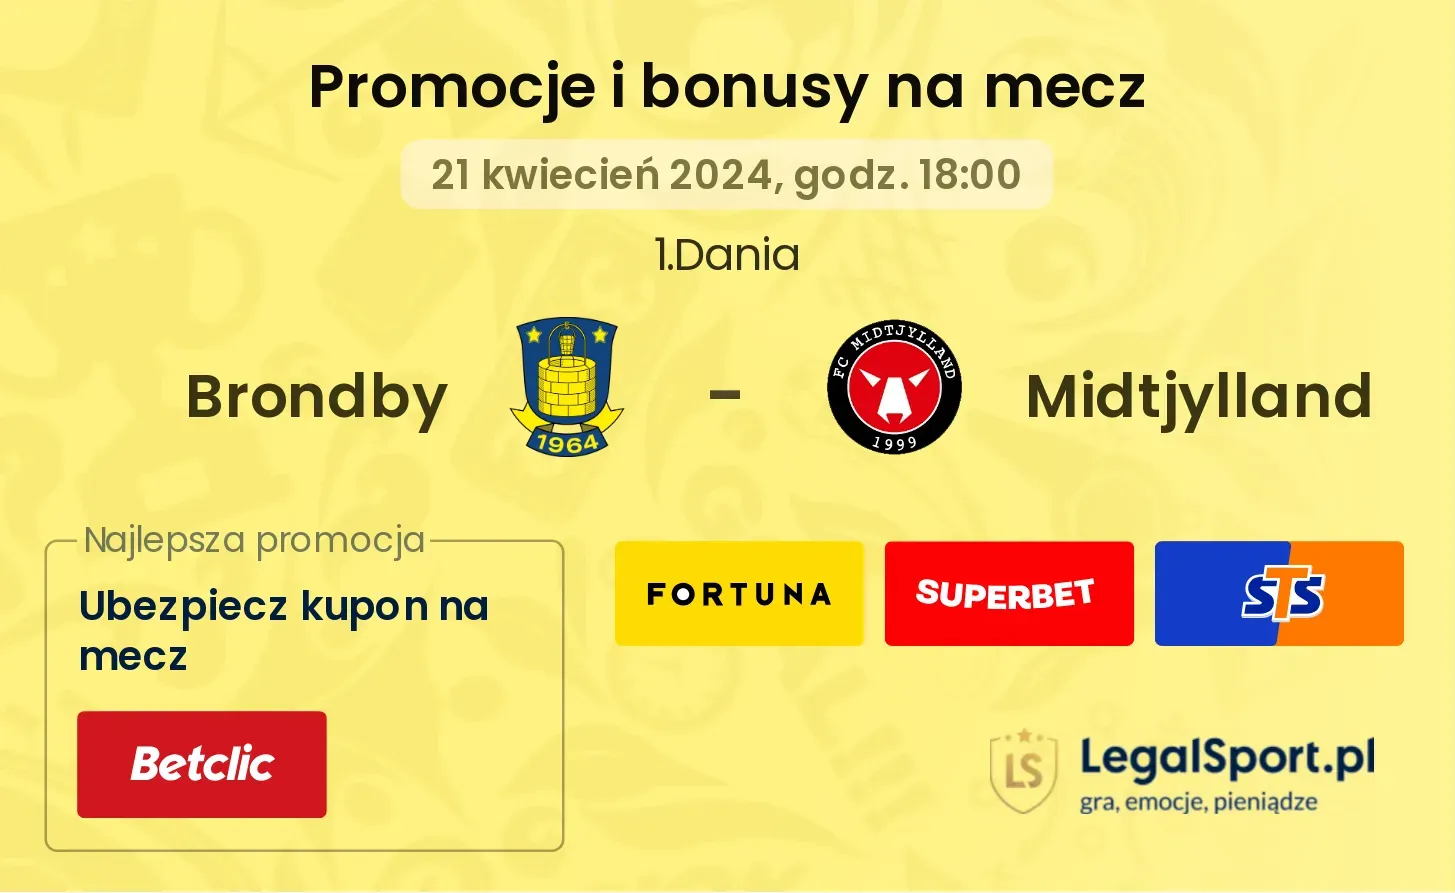 Brondby - Midtjylland promocje bonusy na mecz